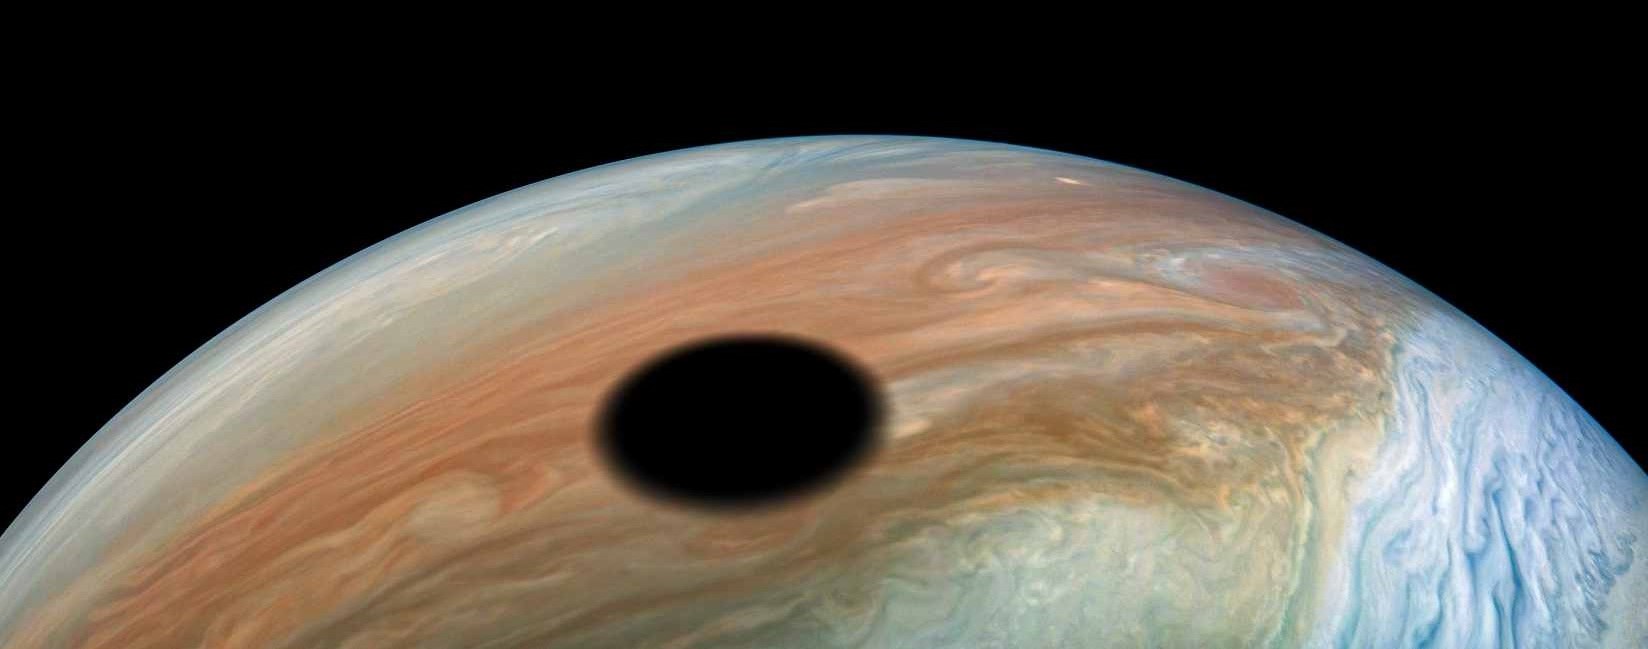 Juno image of Io’s shadow on Jupiter in September 2019